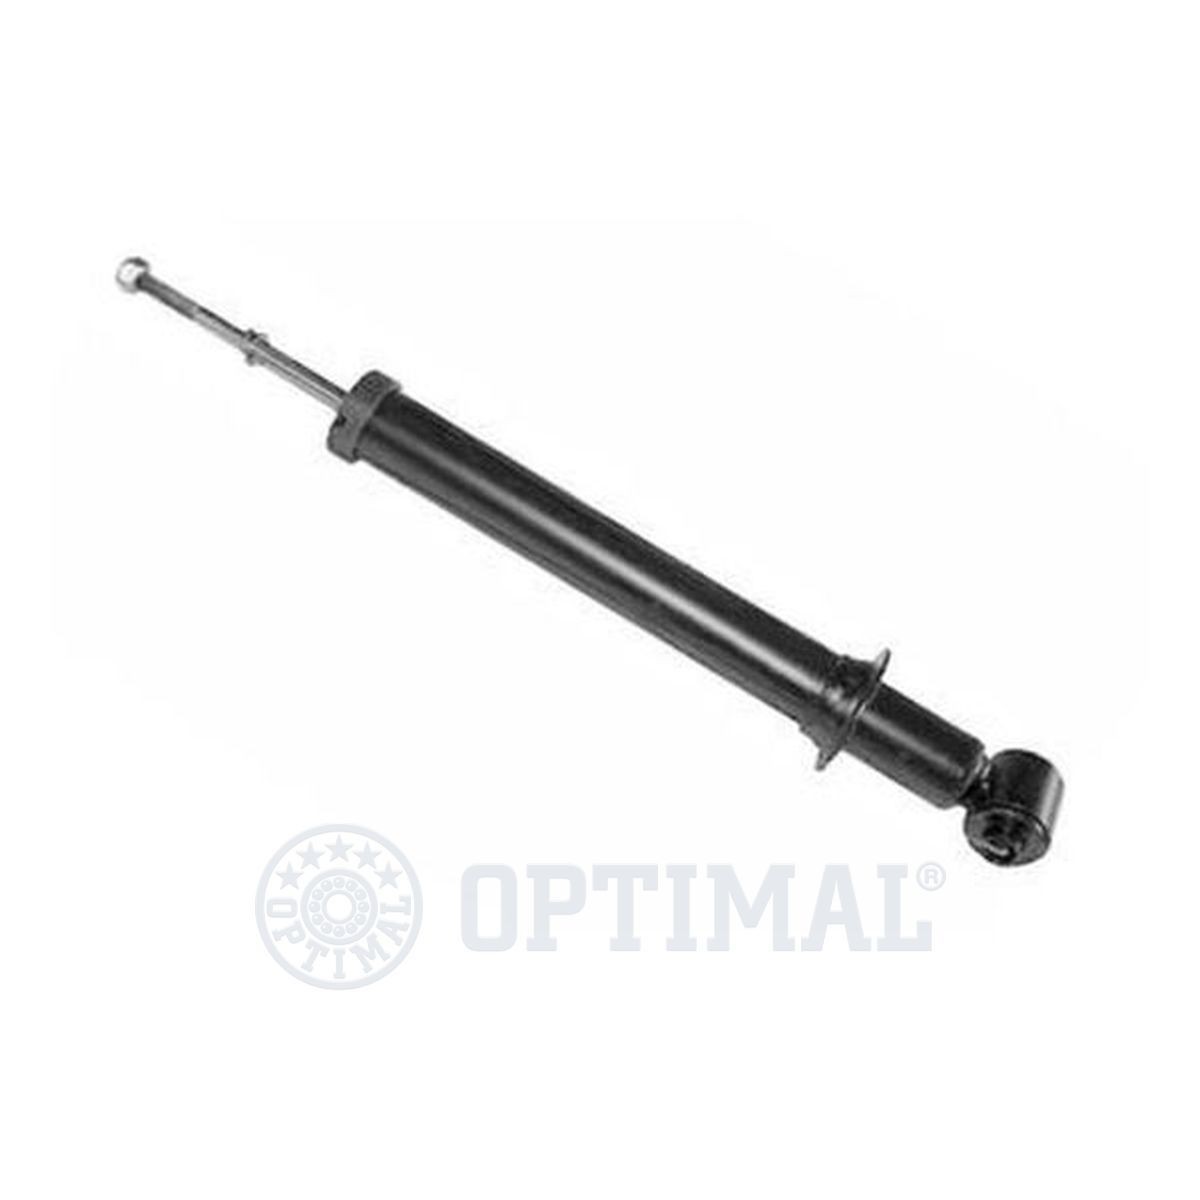 OPTIMAL A-68380G Shock absorber Rear Axle, Gas Pressure, Spring-bearing Damper, Bottom eye, Top pin